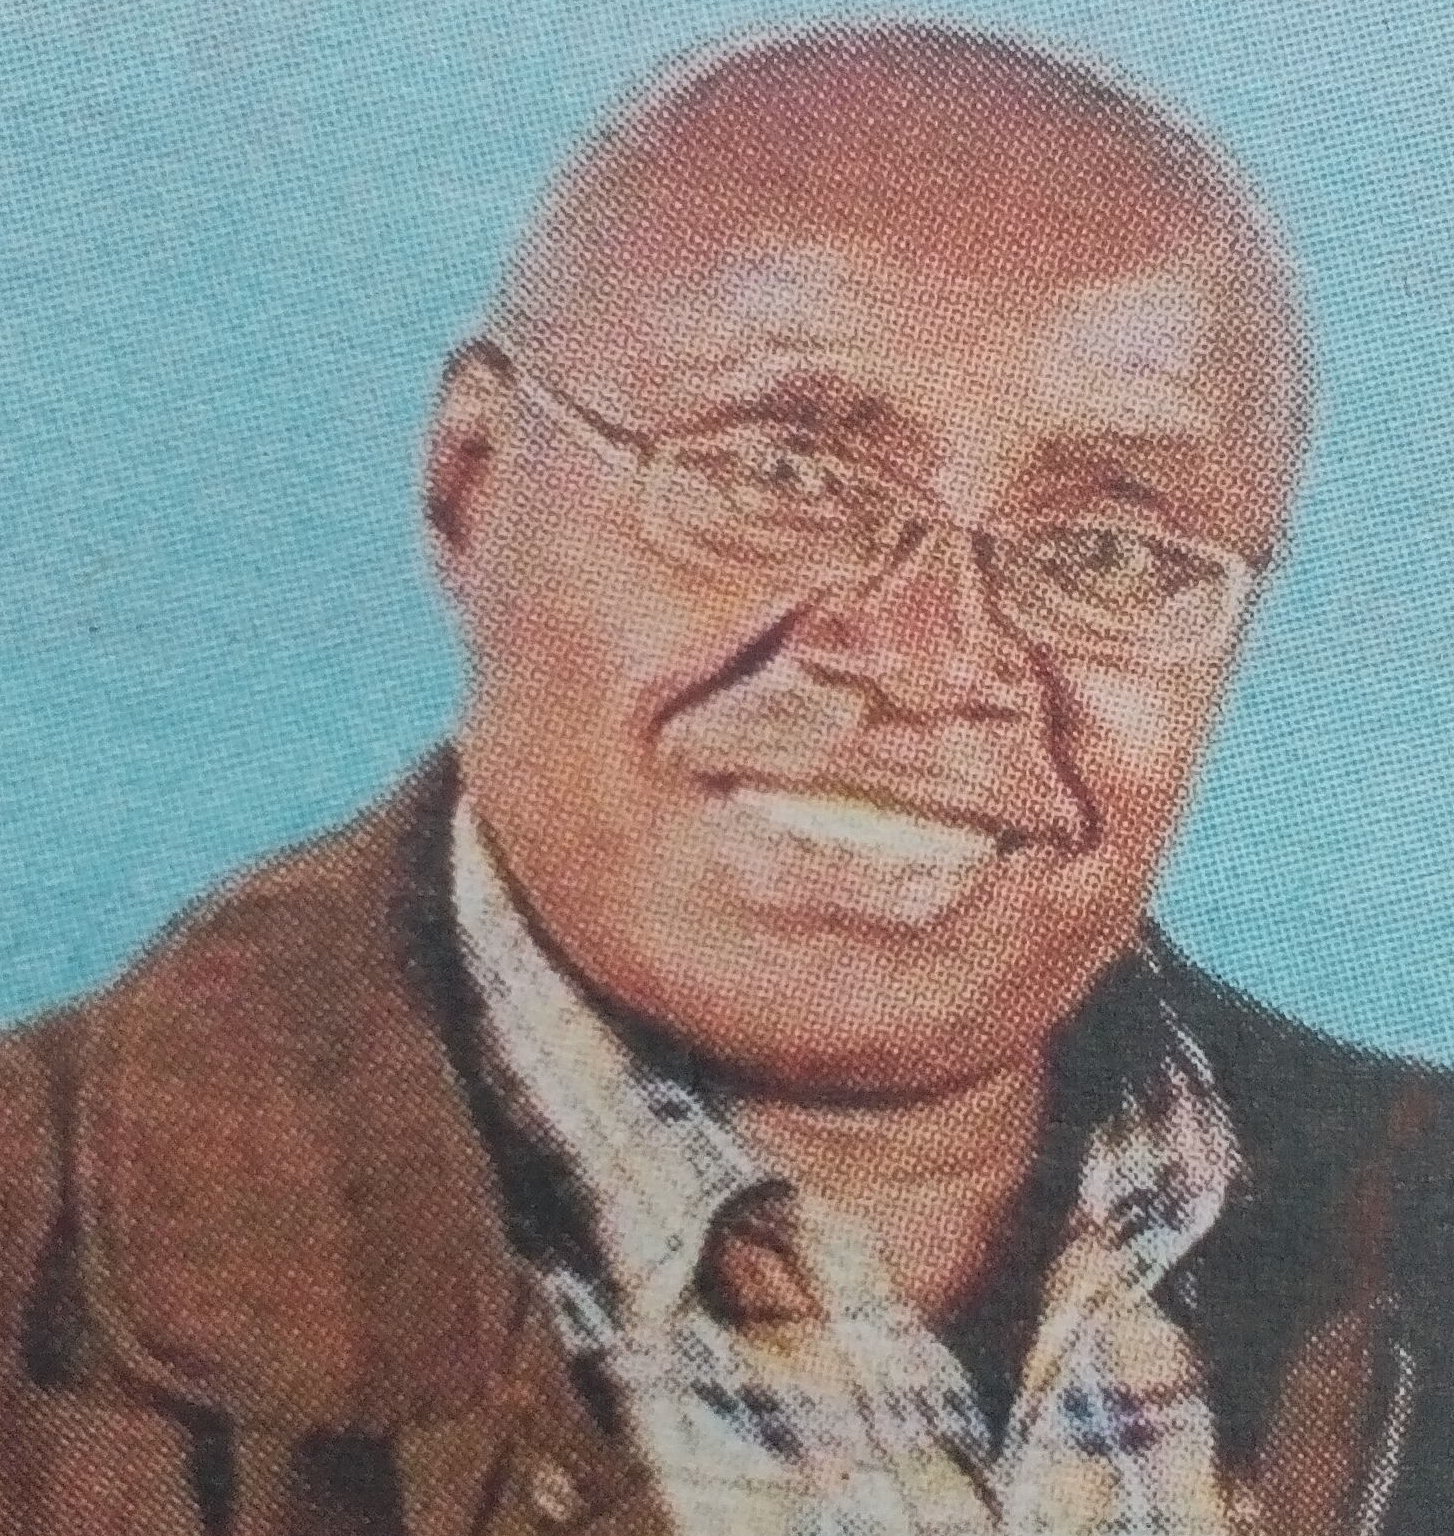 Obituary Image of James Laki Mutuku